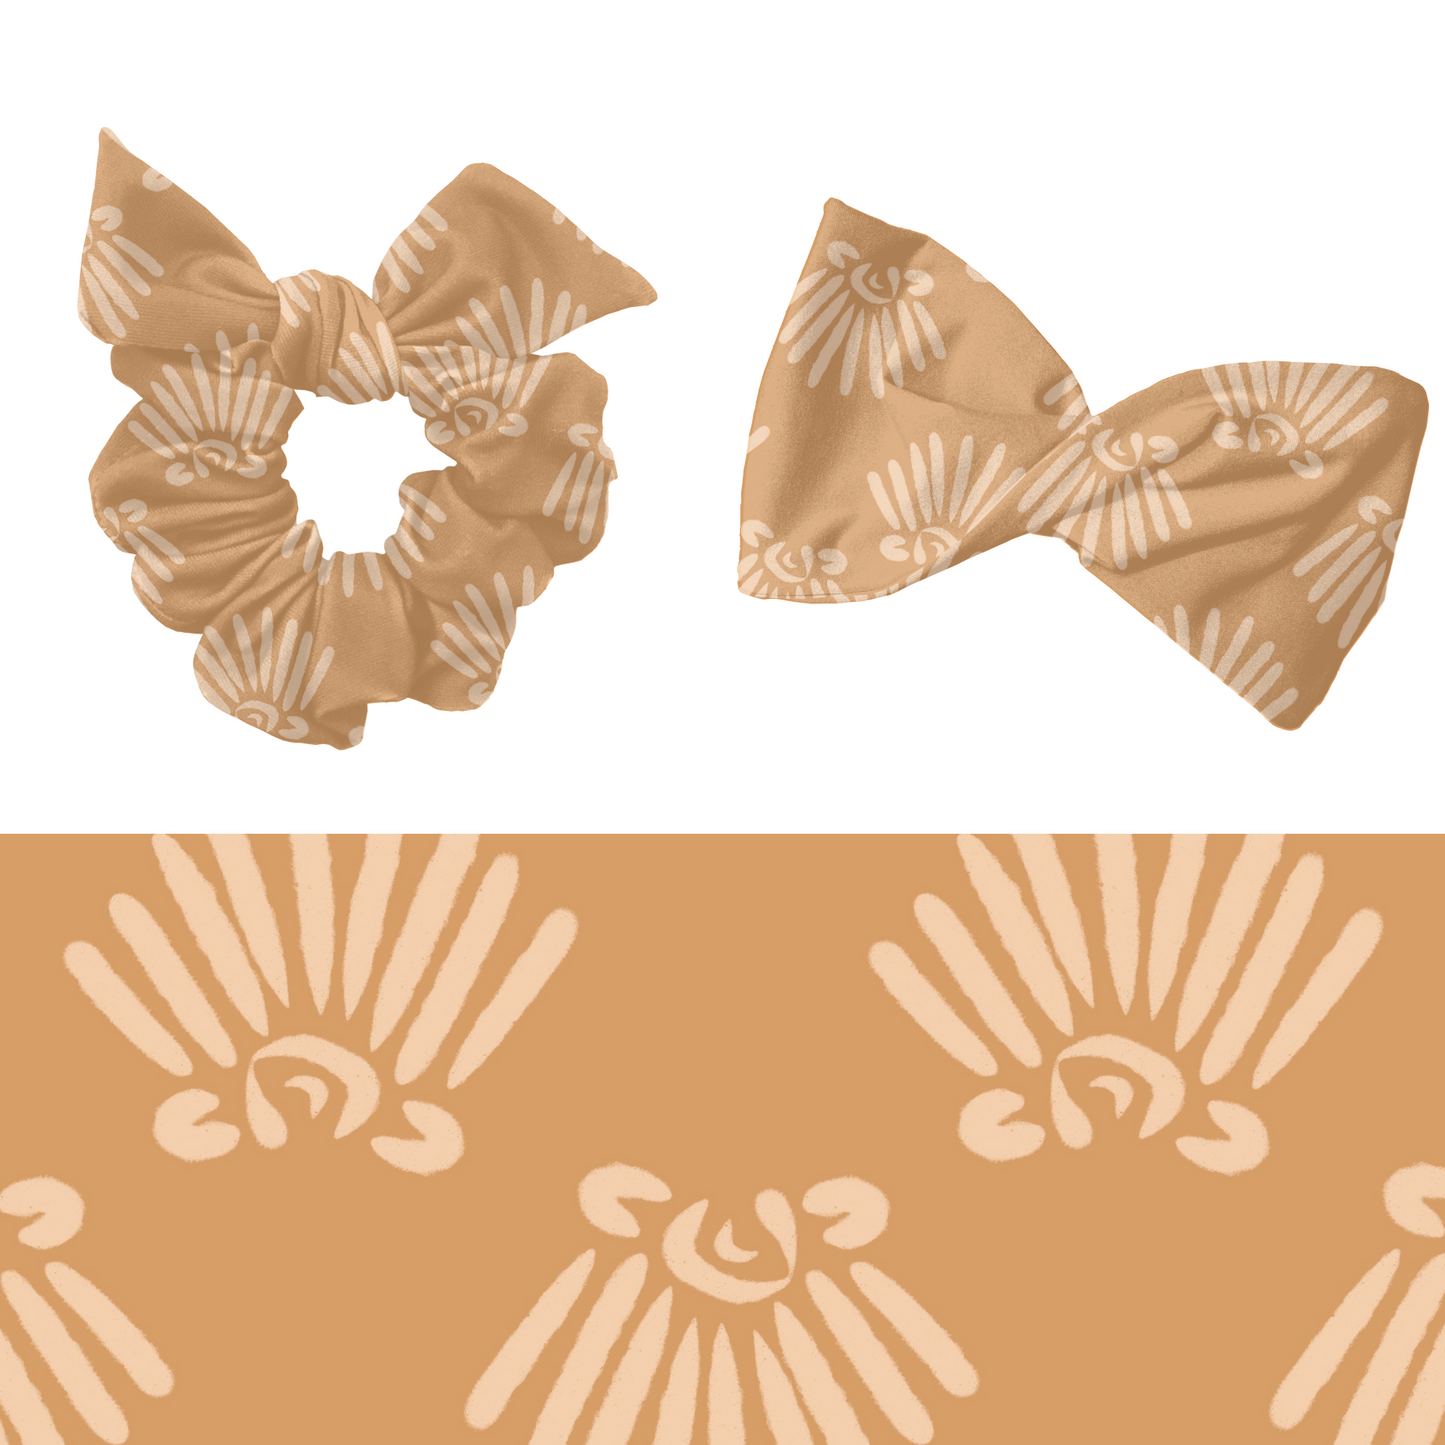 Boho neutral seashells Pattern